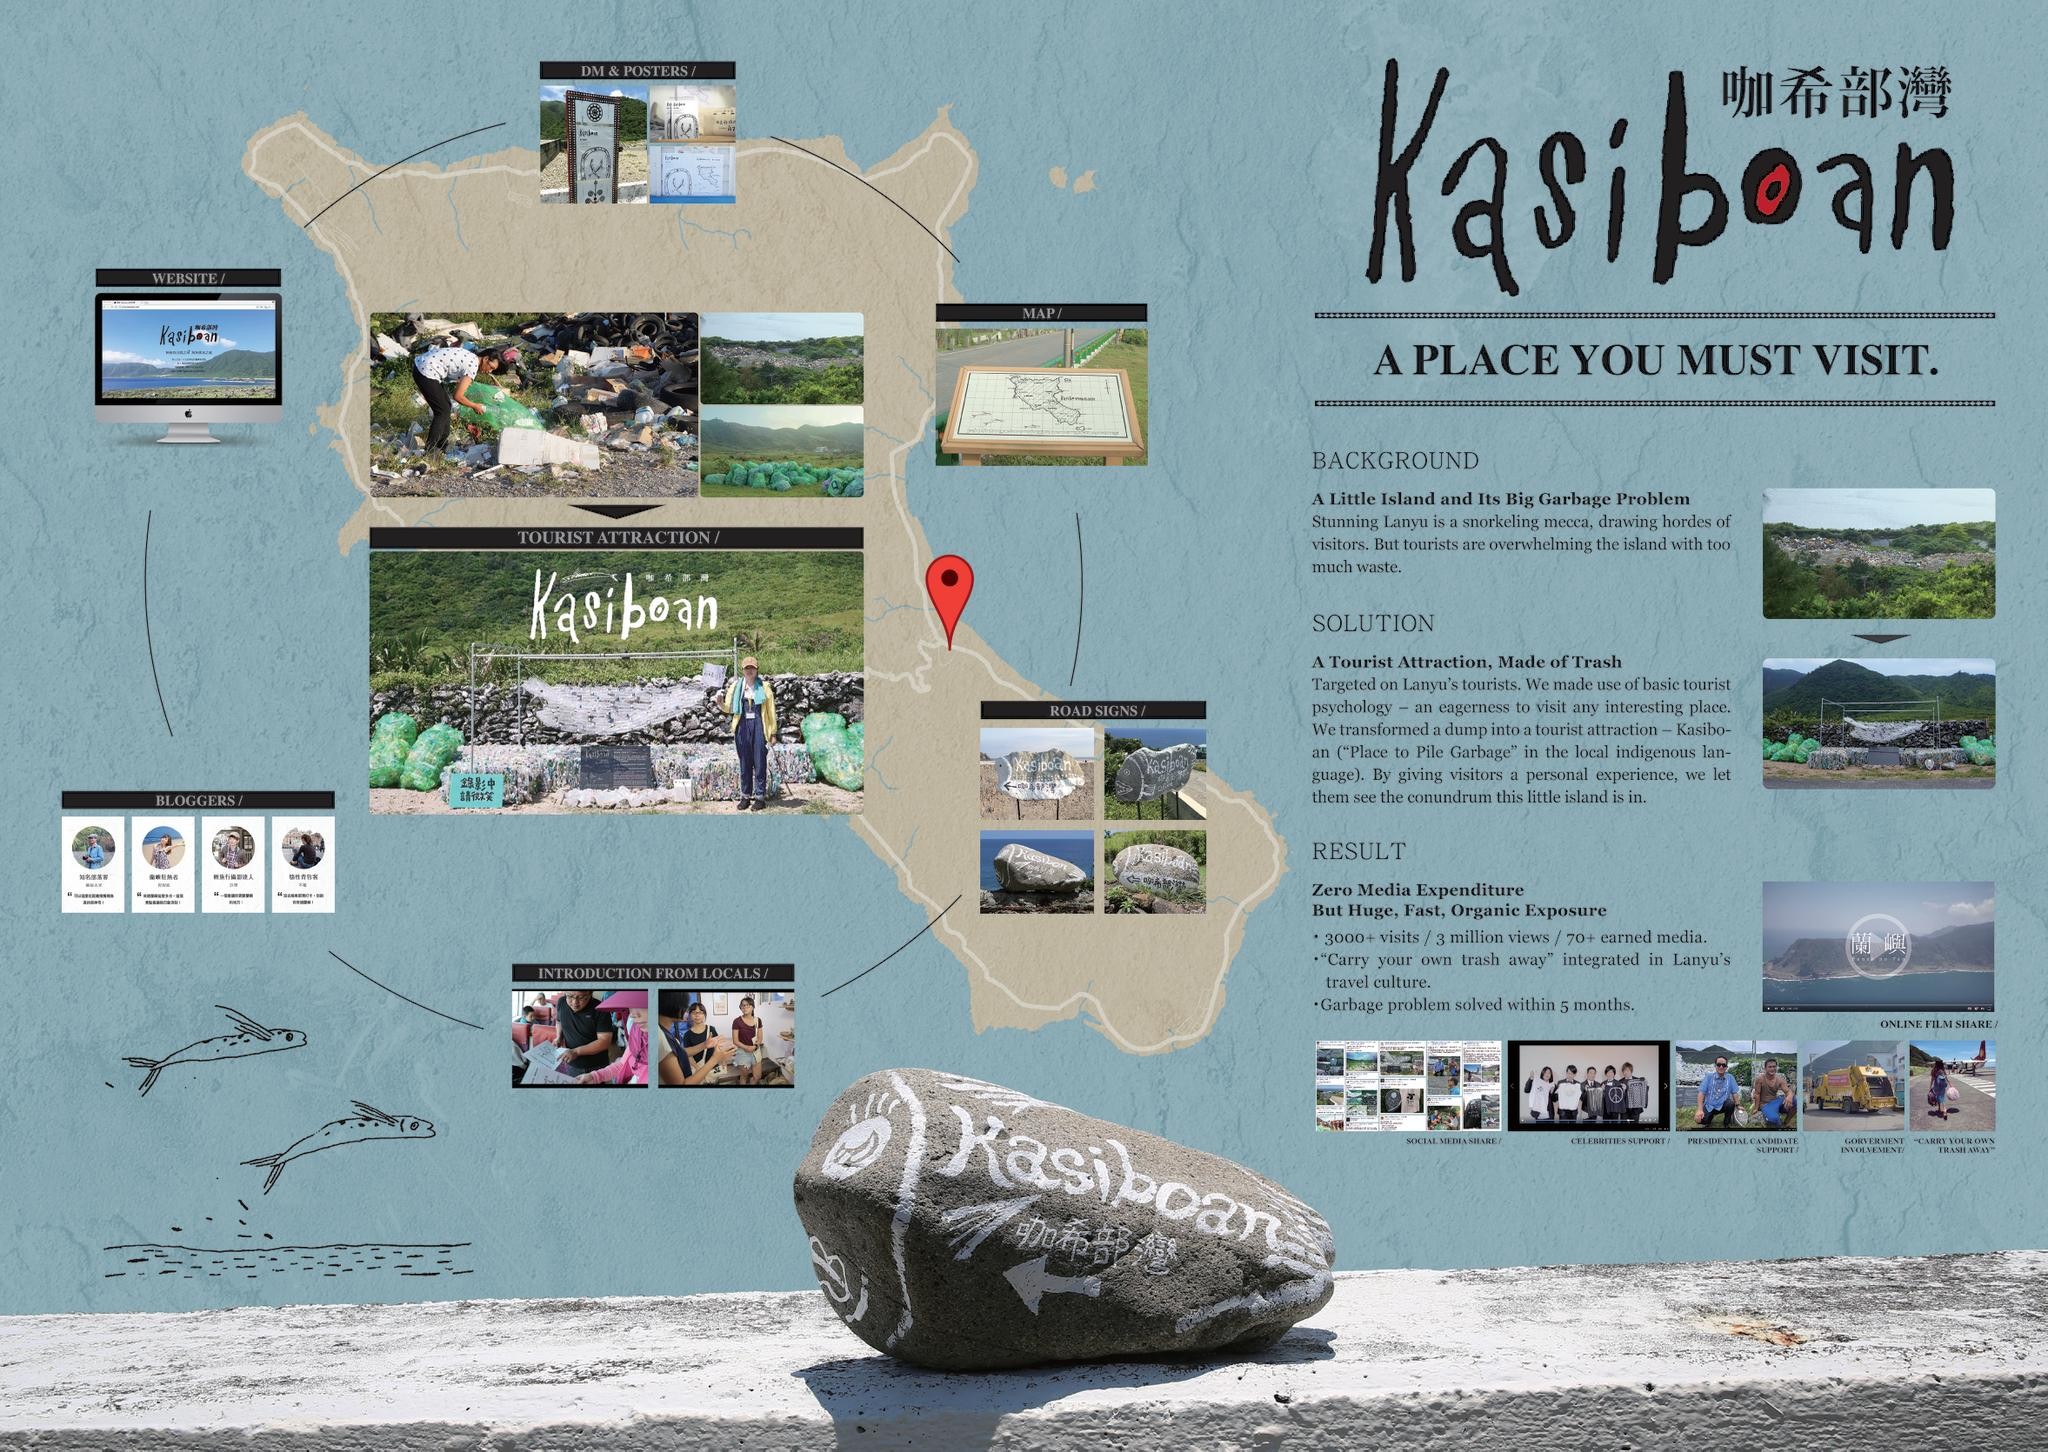 Kasiboan—A place you must visit.